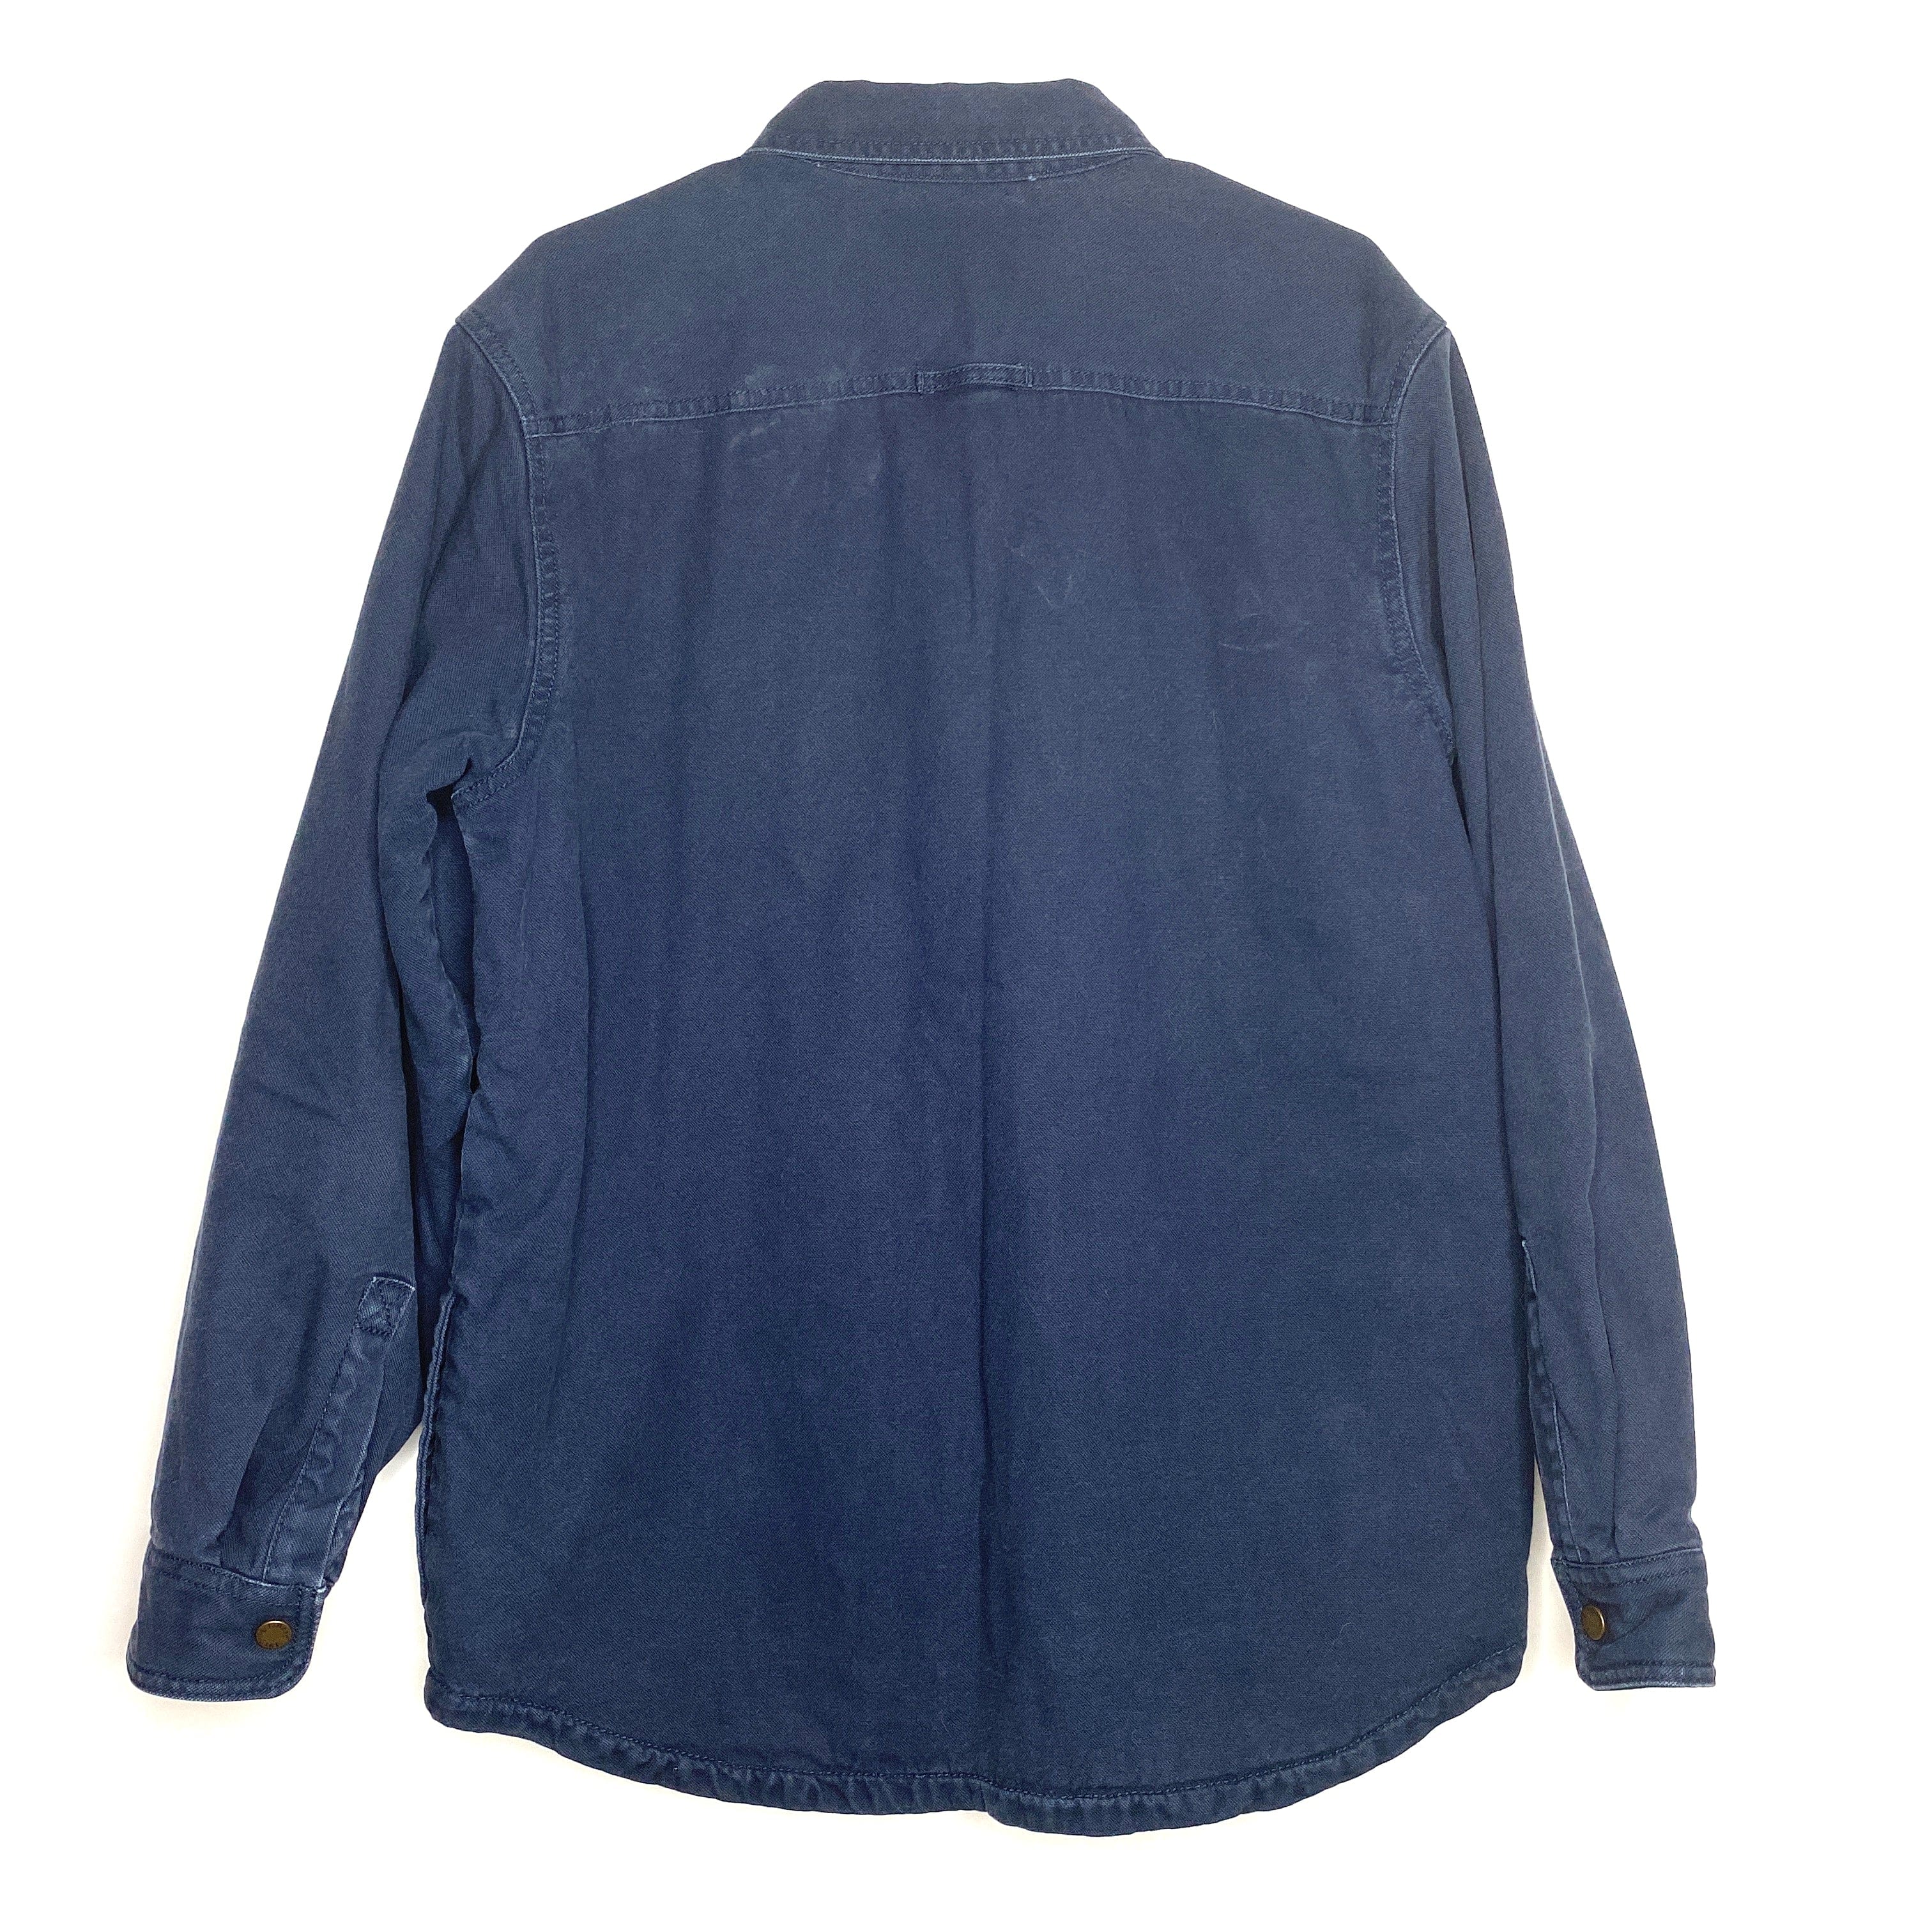 LL Bean Mens Size M Blue Shacket Fleece Lined Jacket Shirt